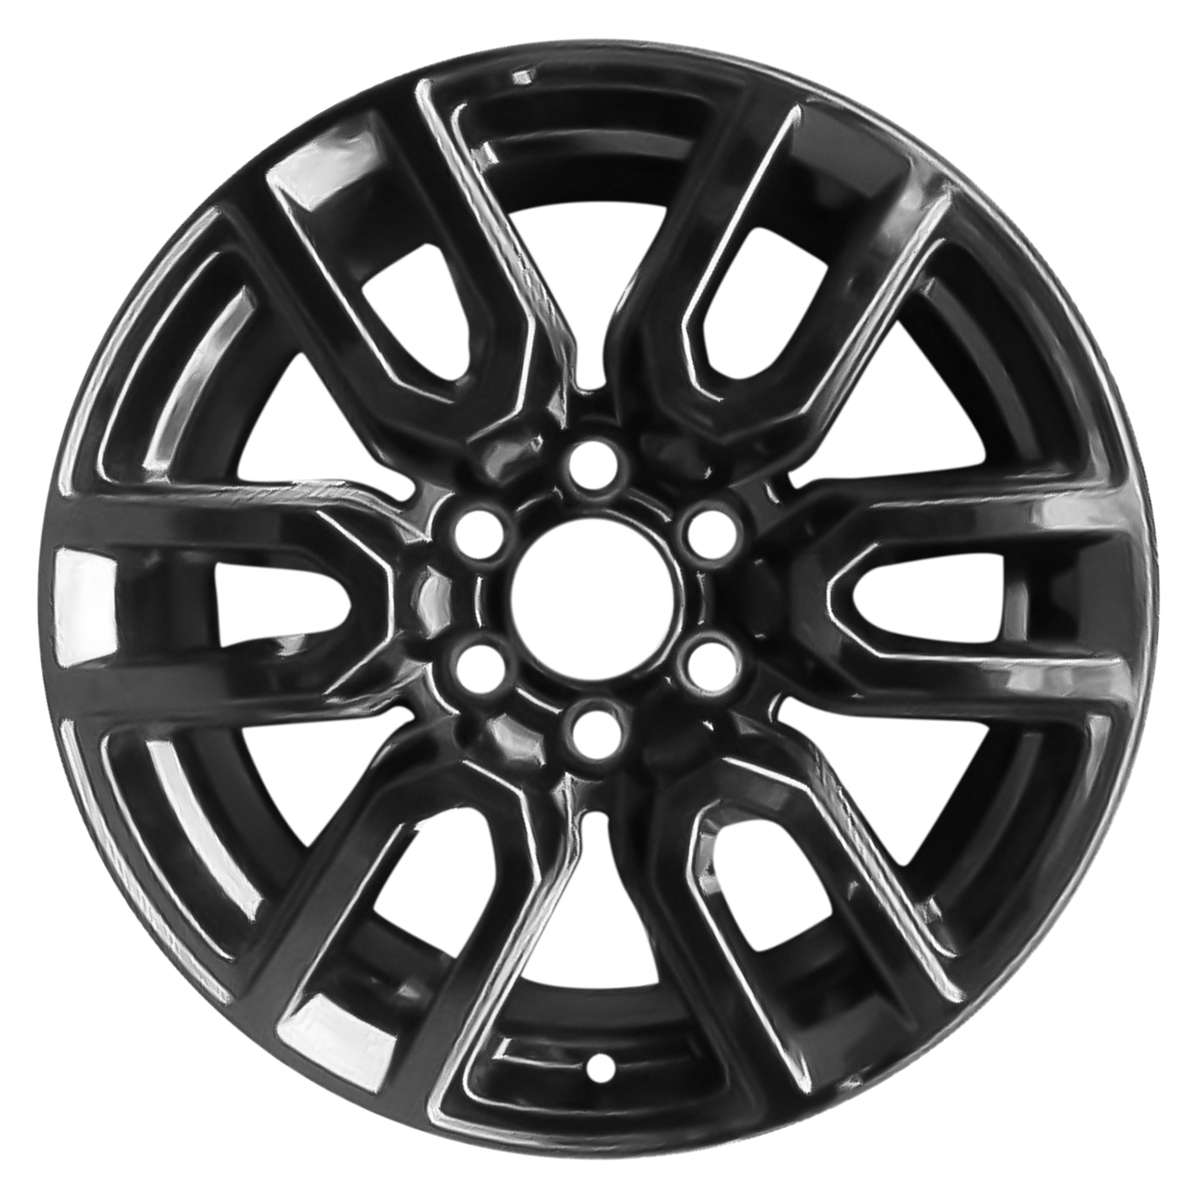 2021 GMC Yukon XL 20" OEM Wheel Rim W5914B